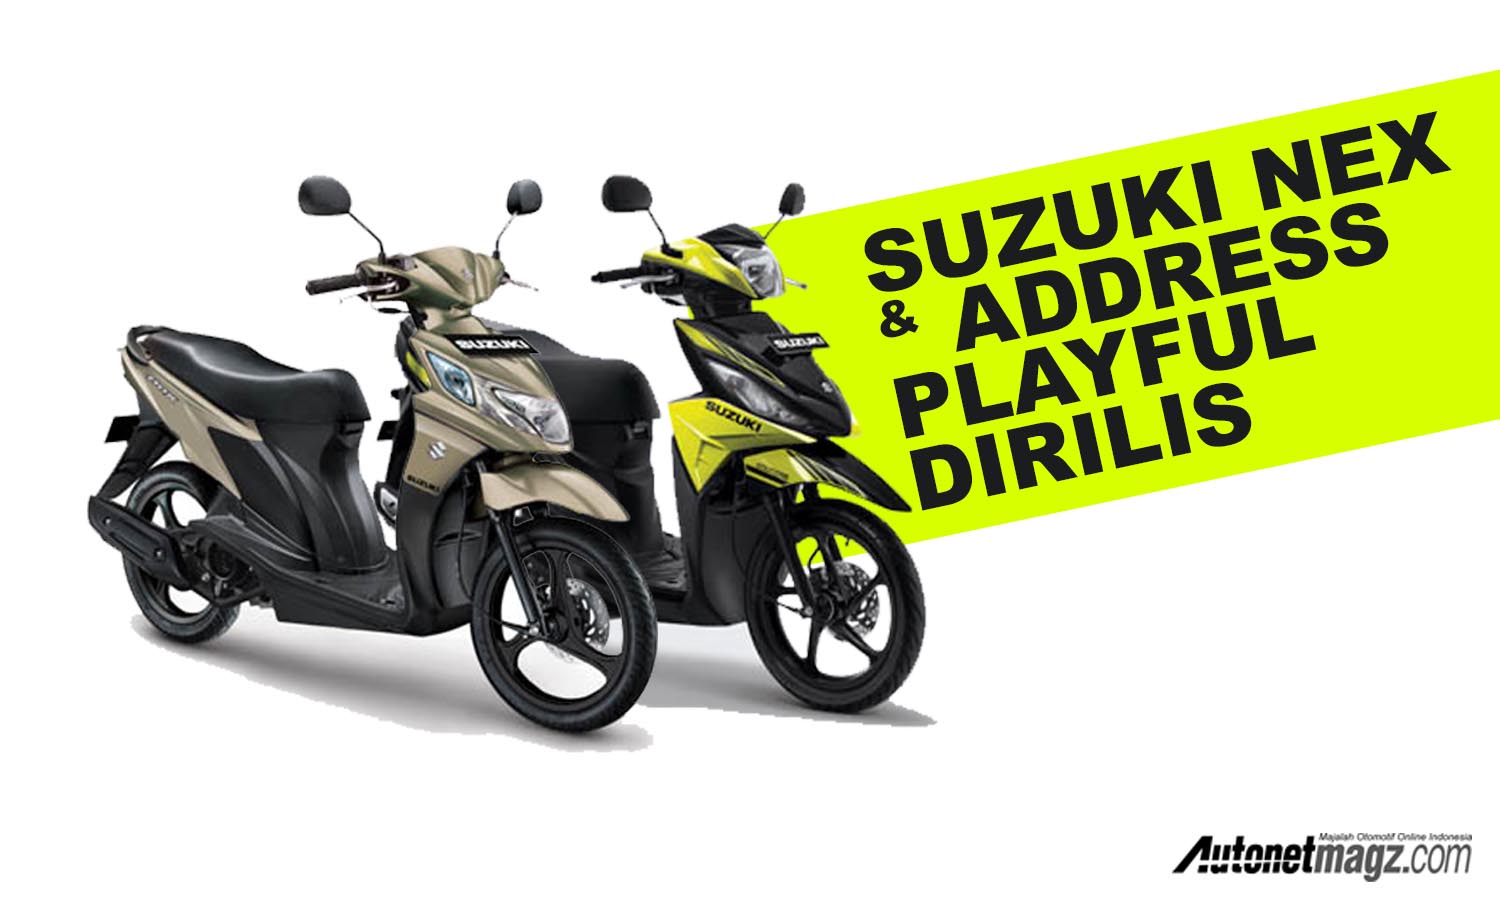 Berita, cover suzuki: Suzuki Bangkitkan Nex dan Rilis Address Playful di Jakarta Fair